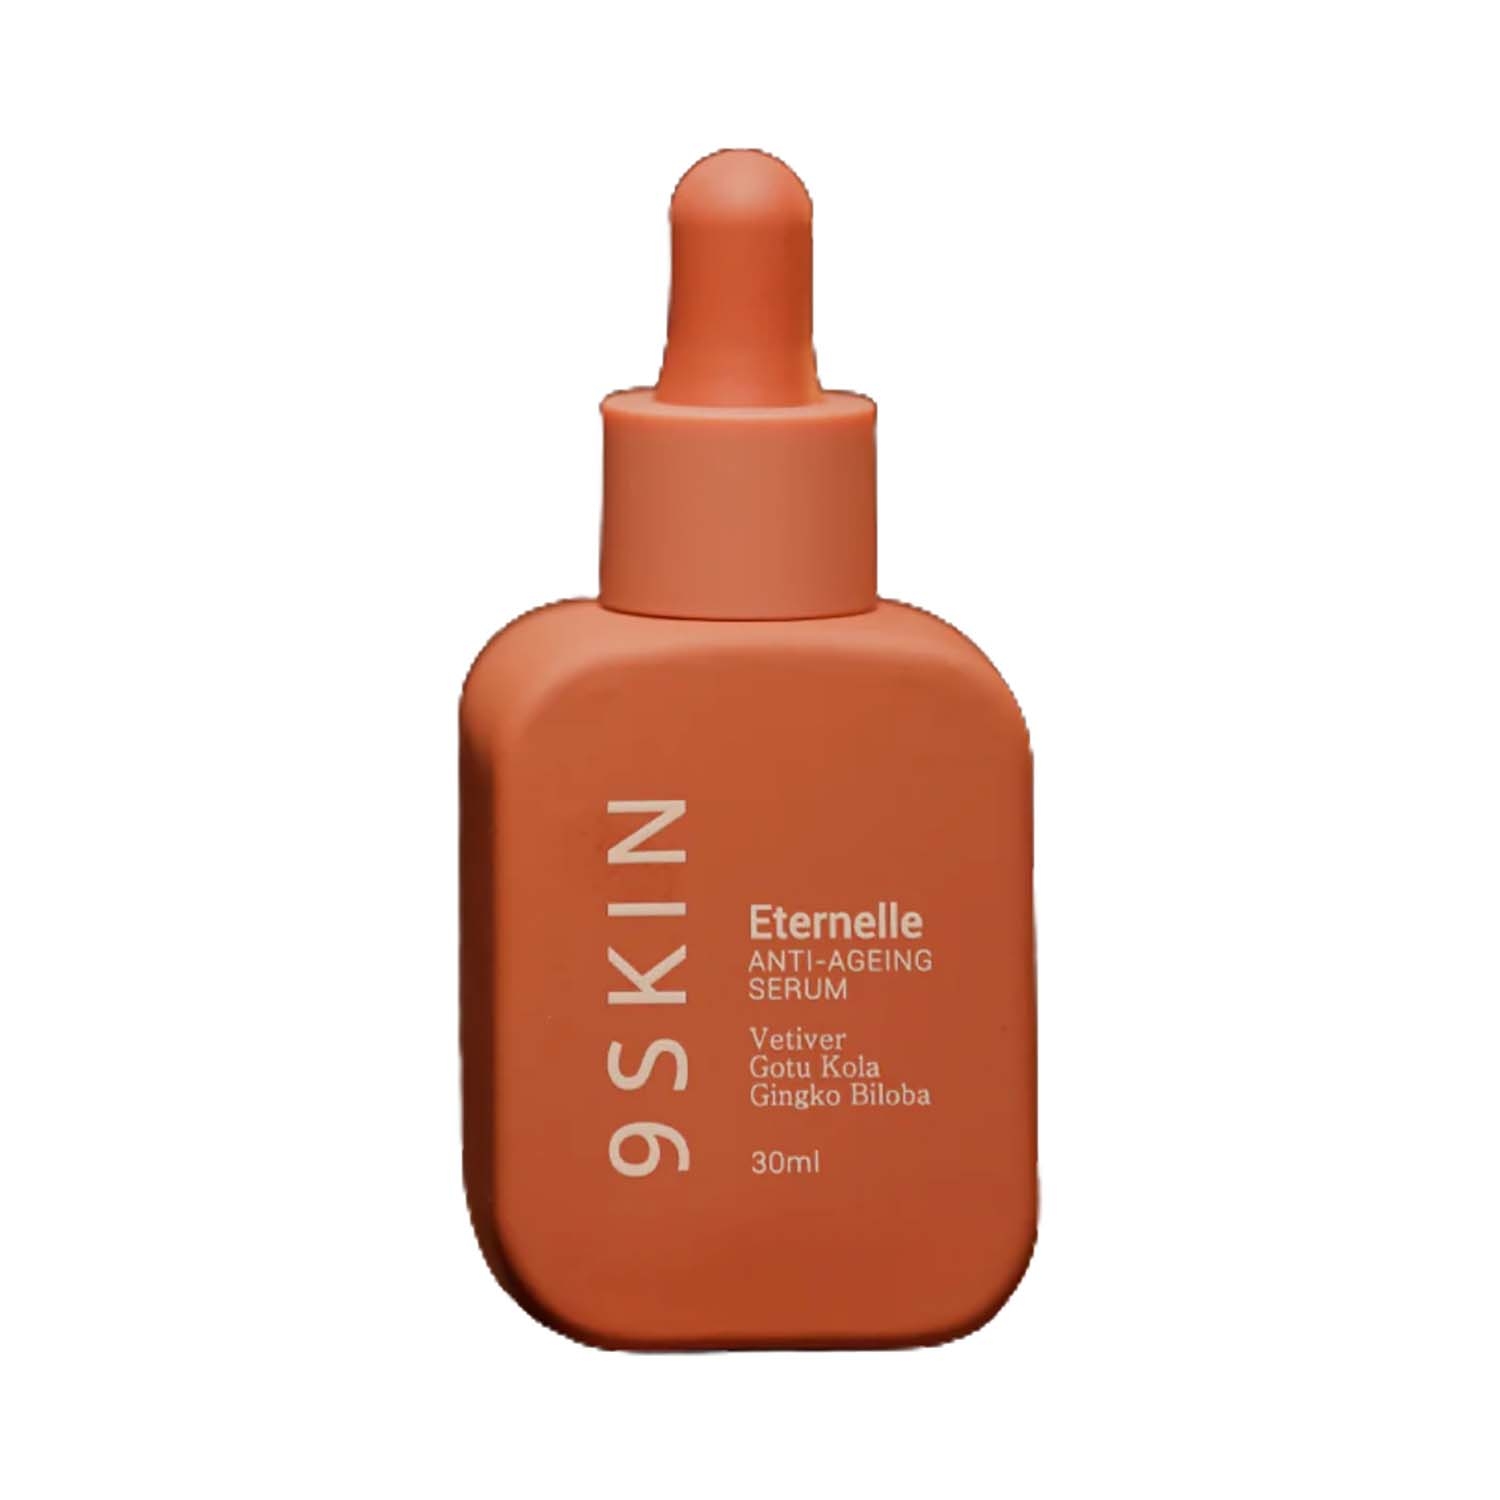 9Skin | 9Skin Eternelle Anti Aging Serum (30ml)